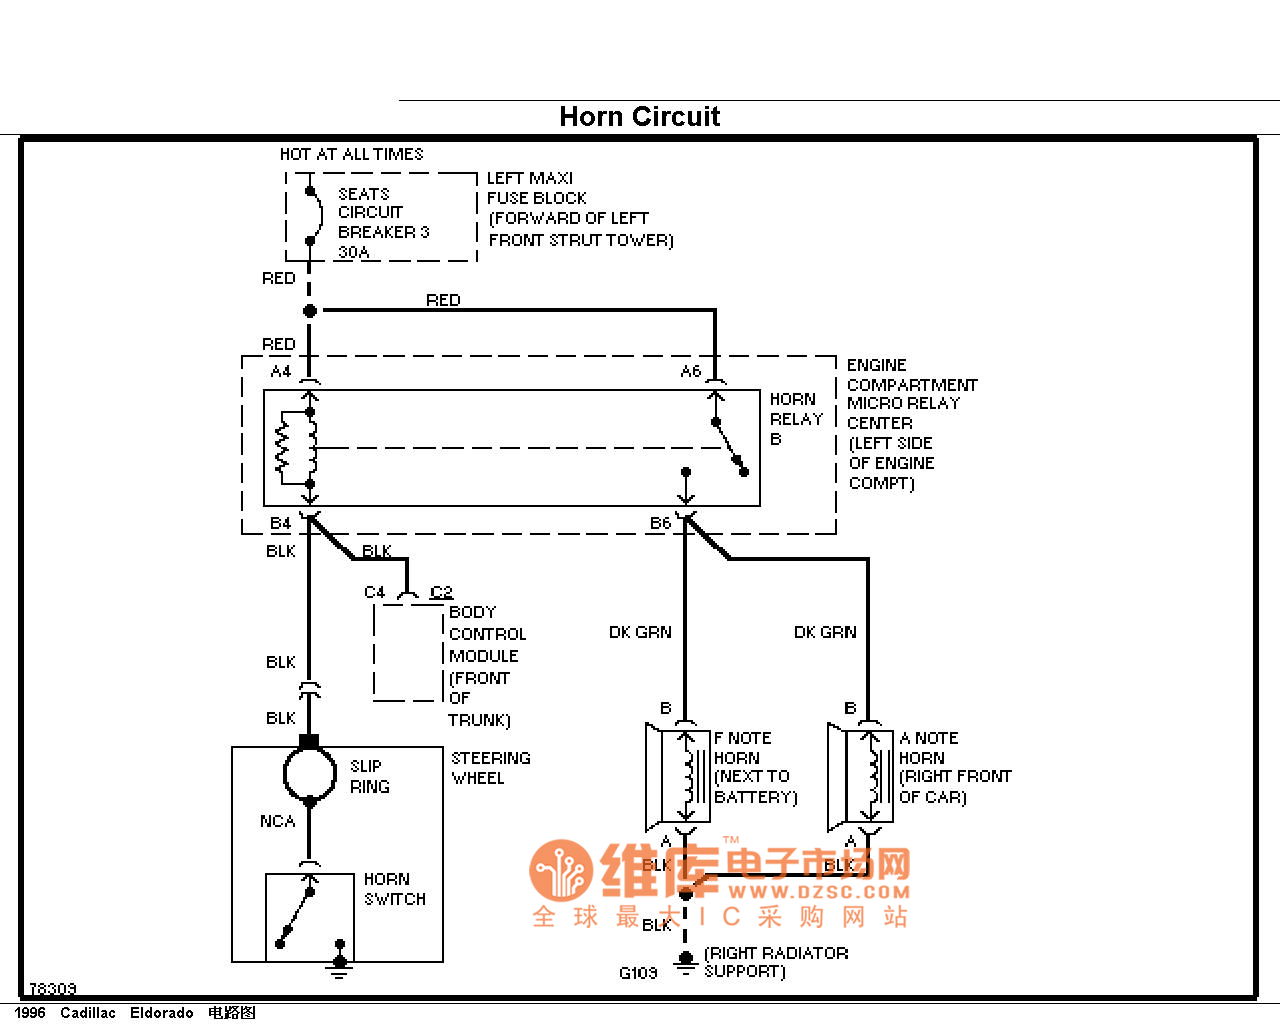 Cadillac Horn Circuit Diagram